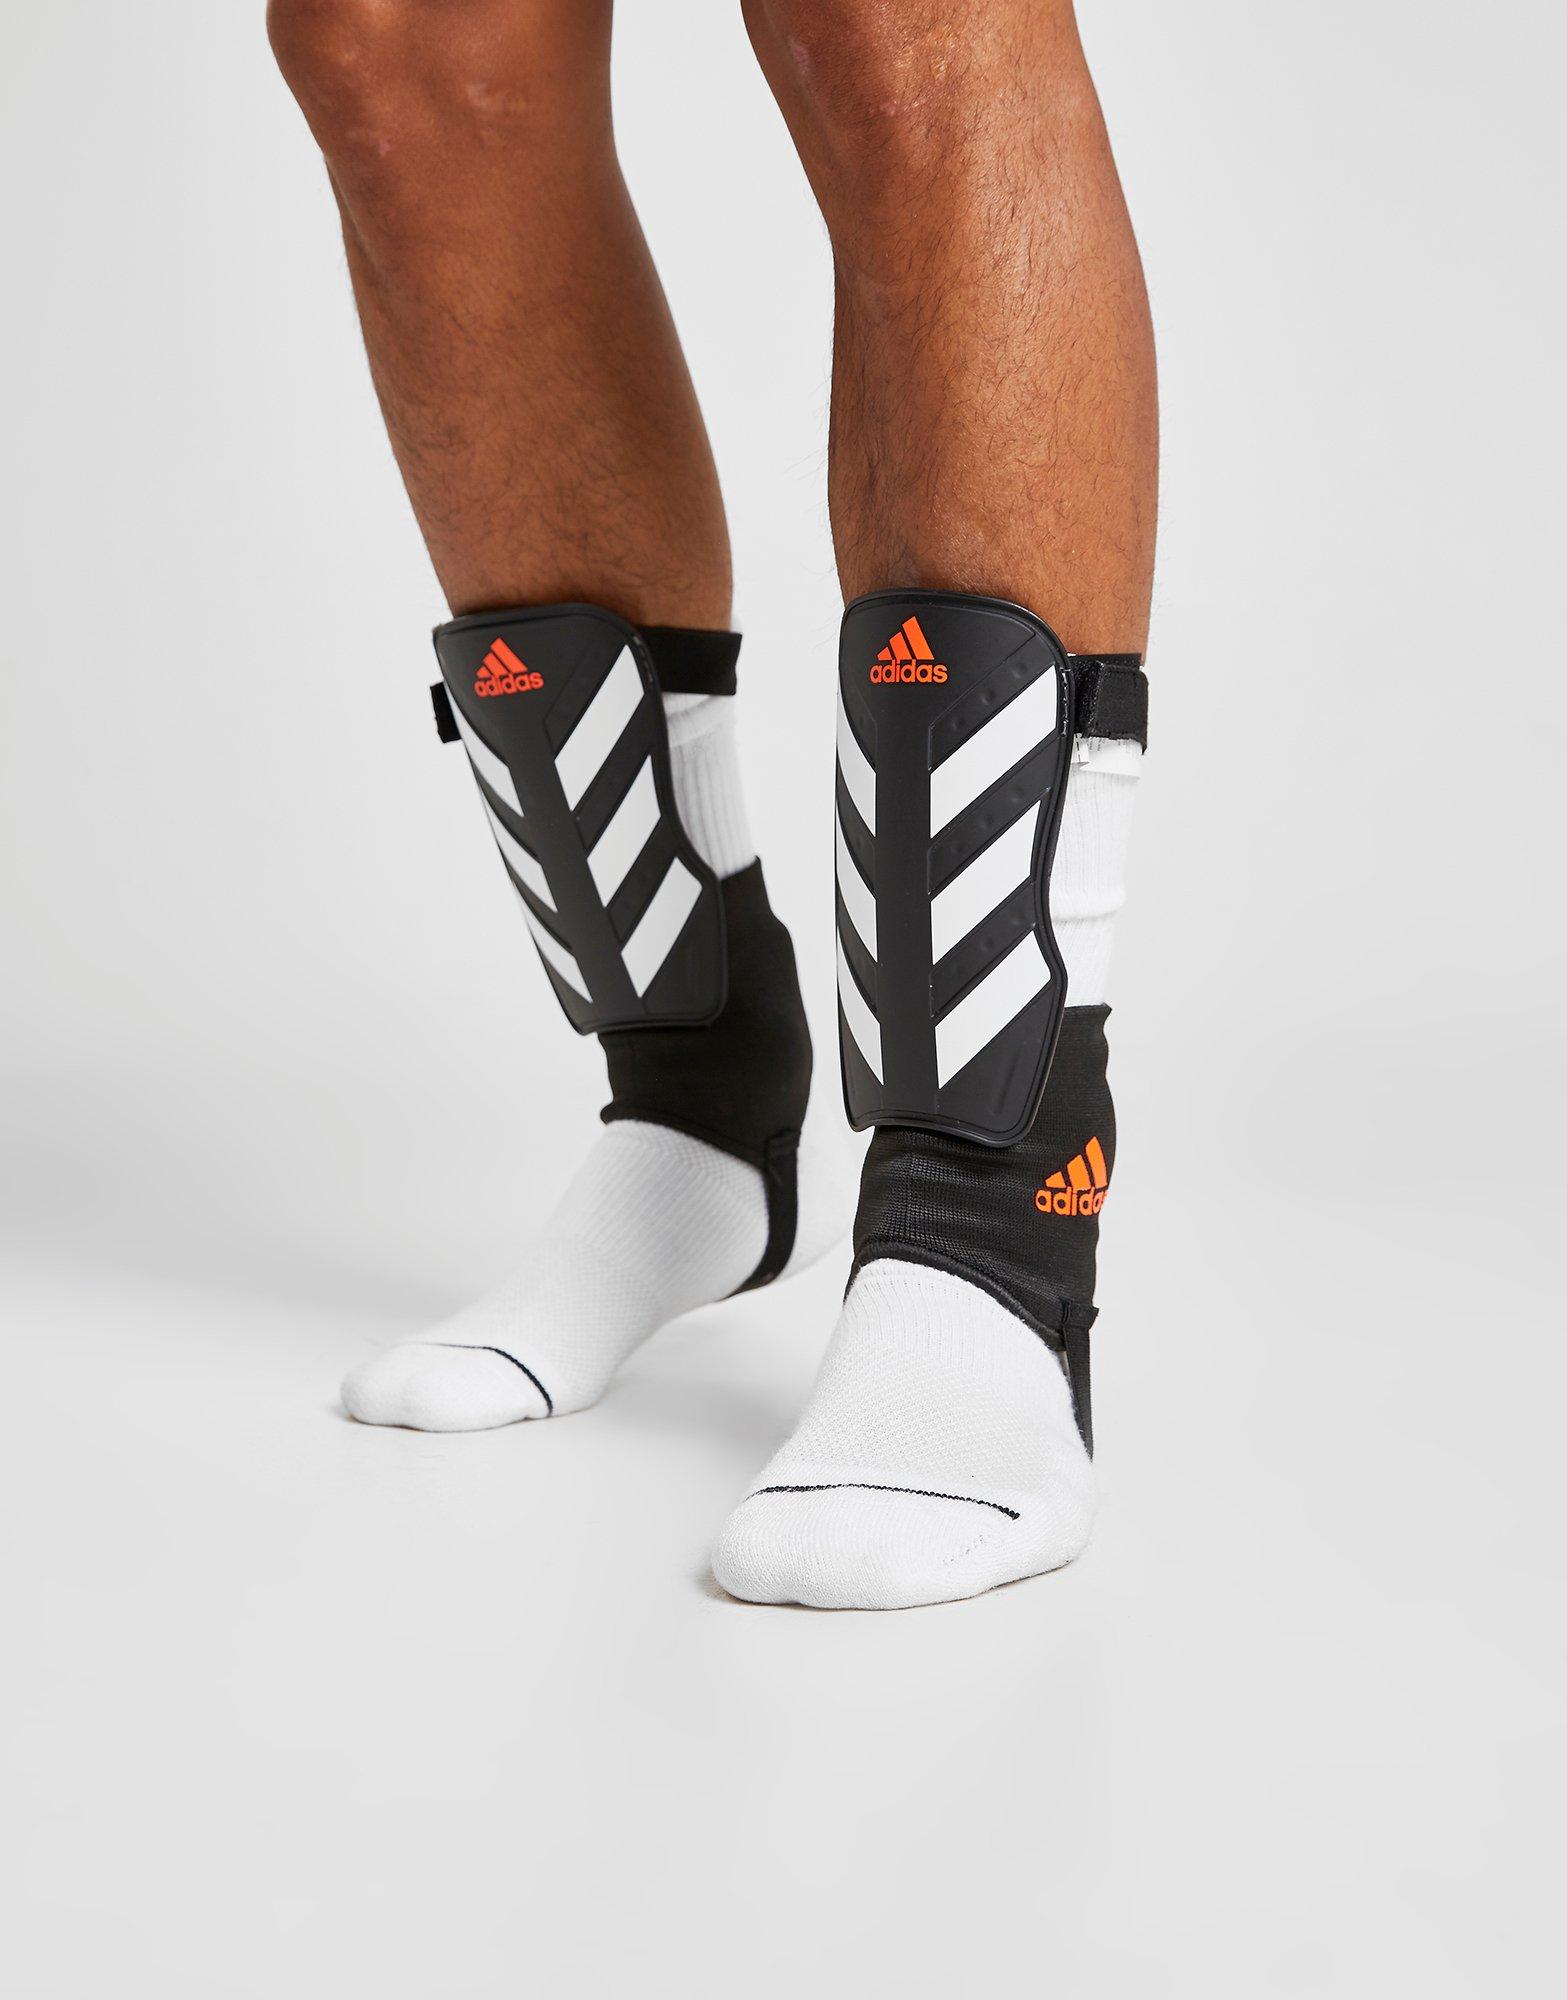 adidas shin guard socks